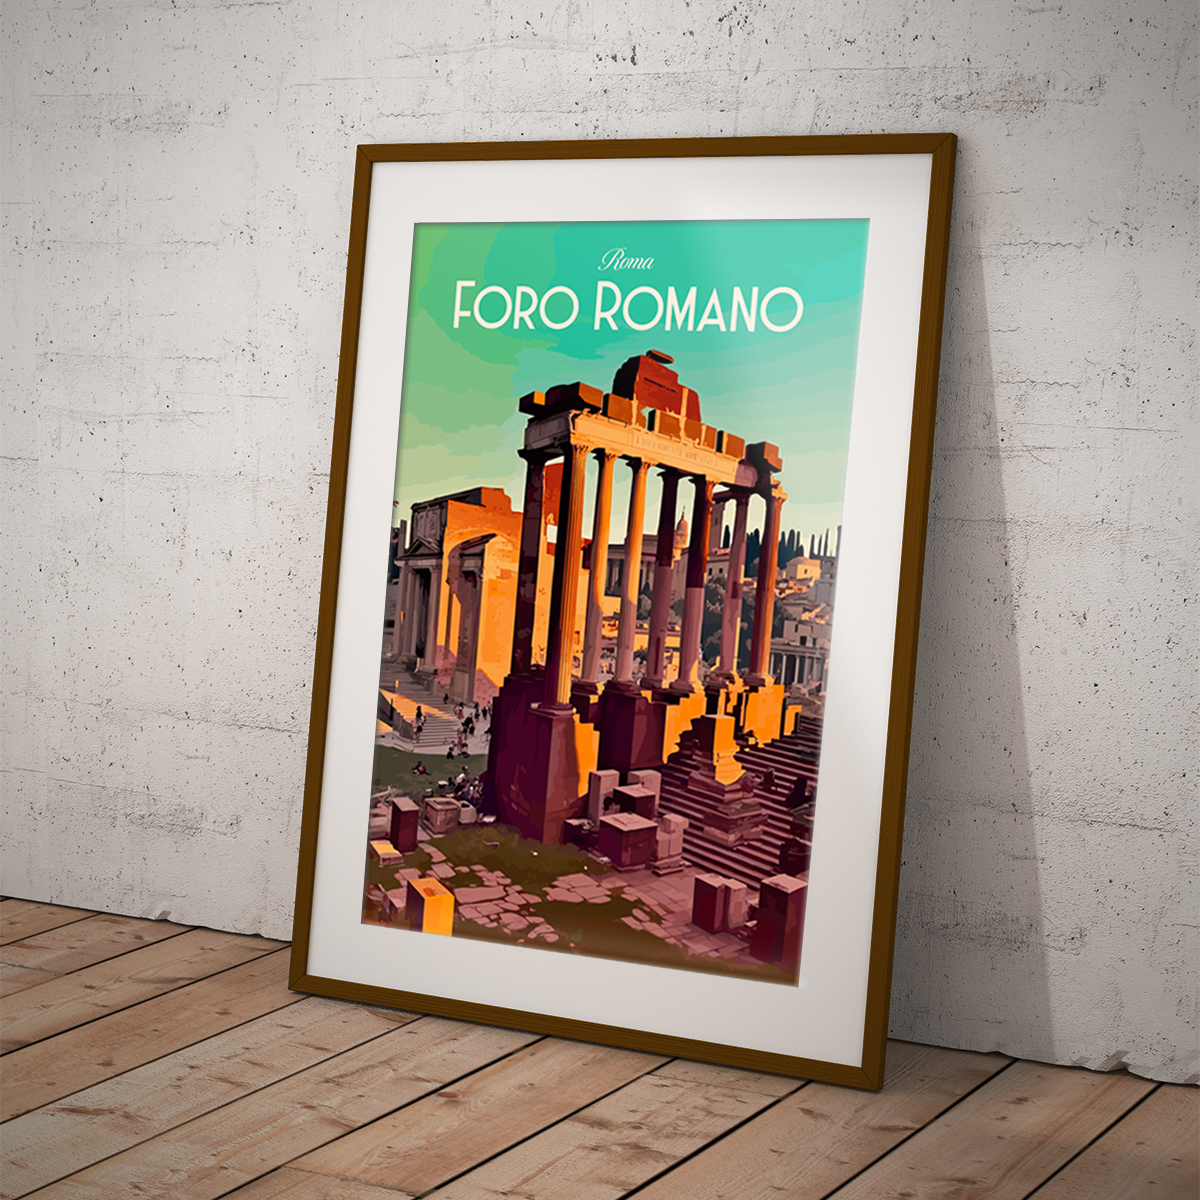 Roma - Foro Romano poster by bon voyage design